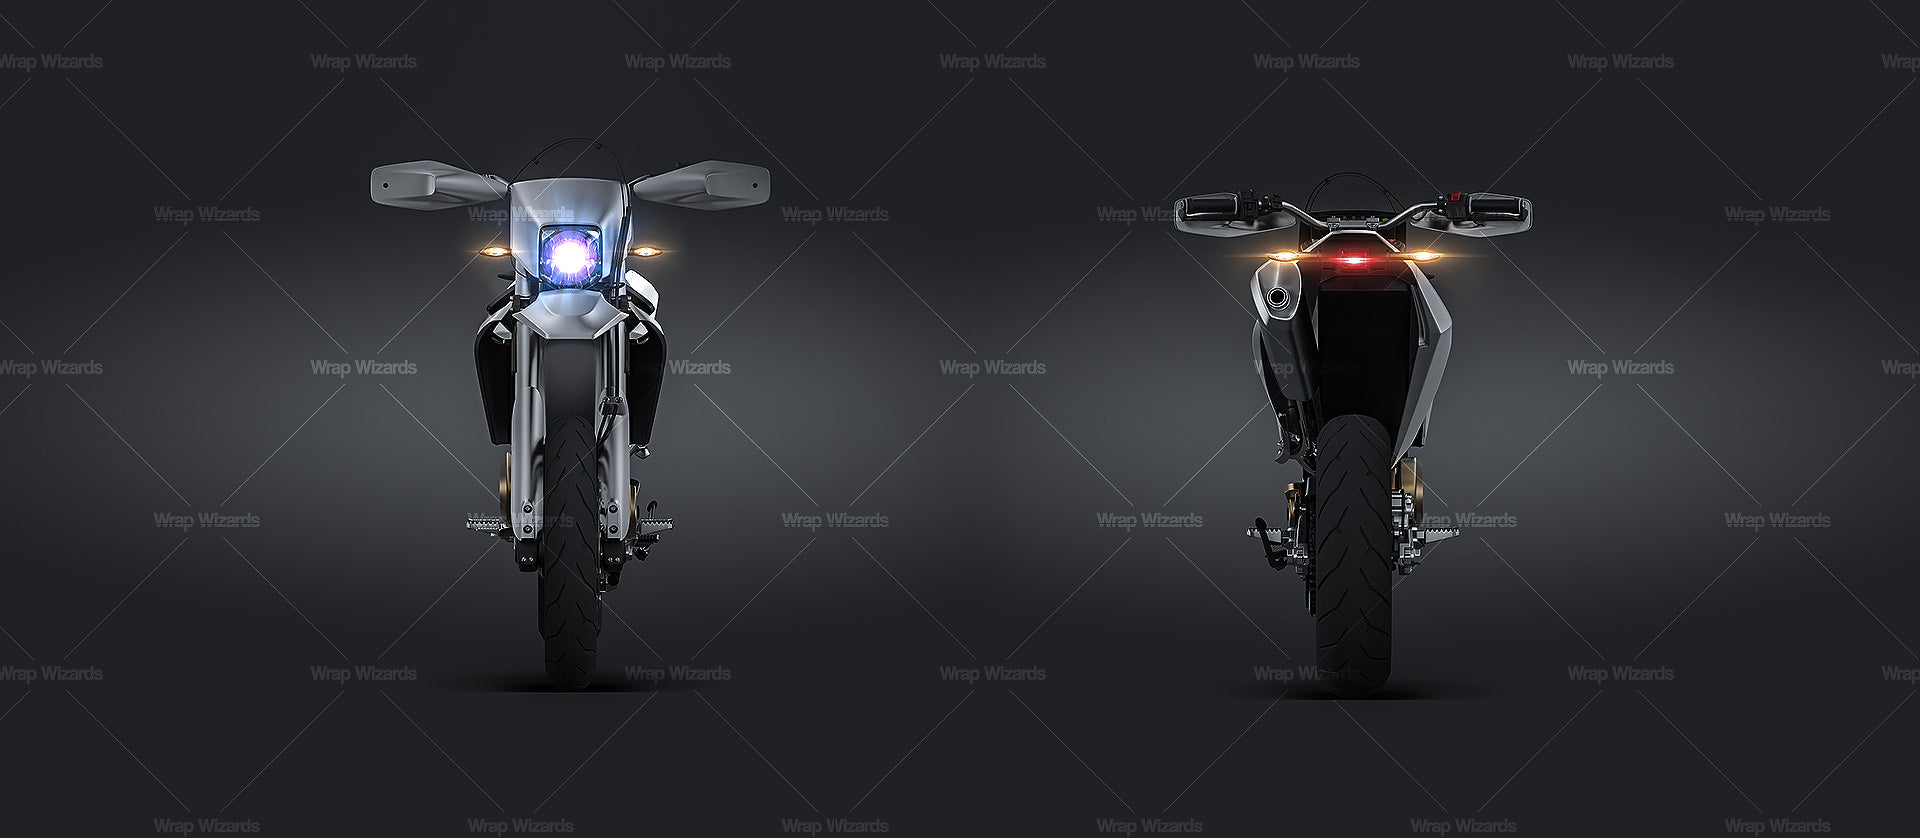 Husqvarna 701 Supermoto - Motorcycle Mockup